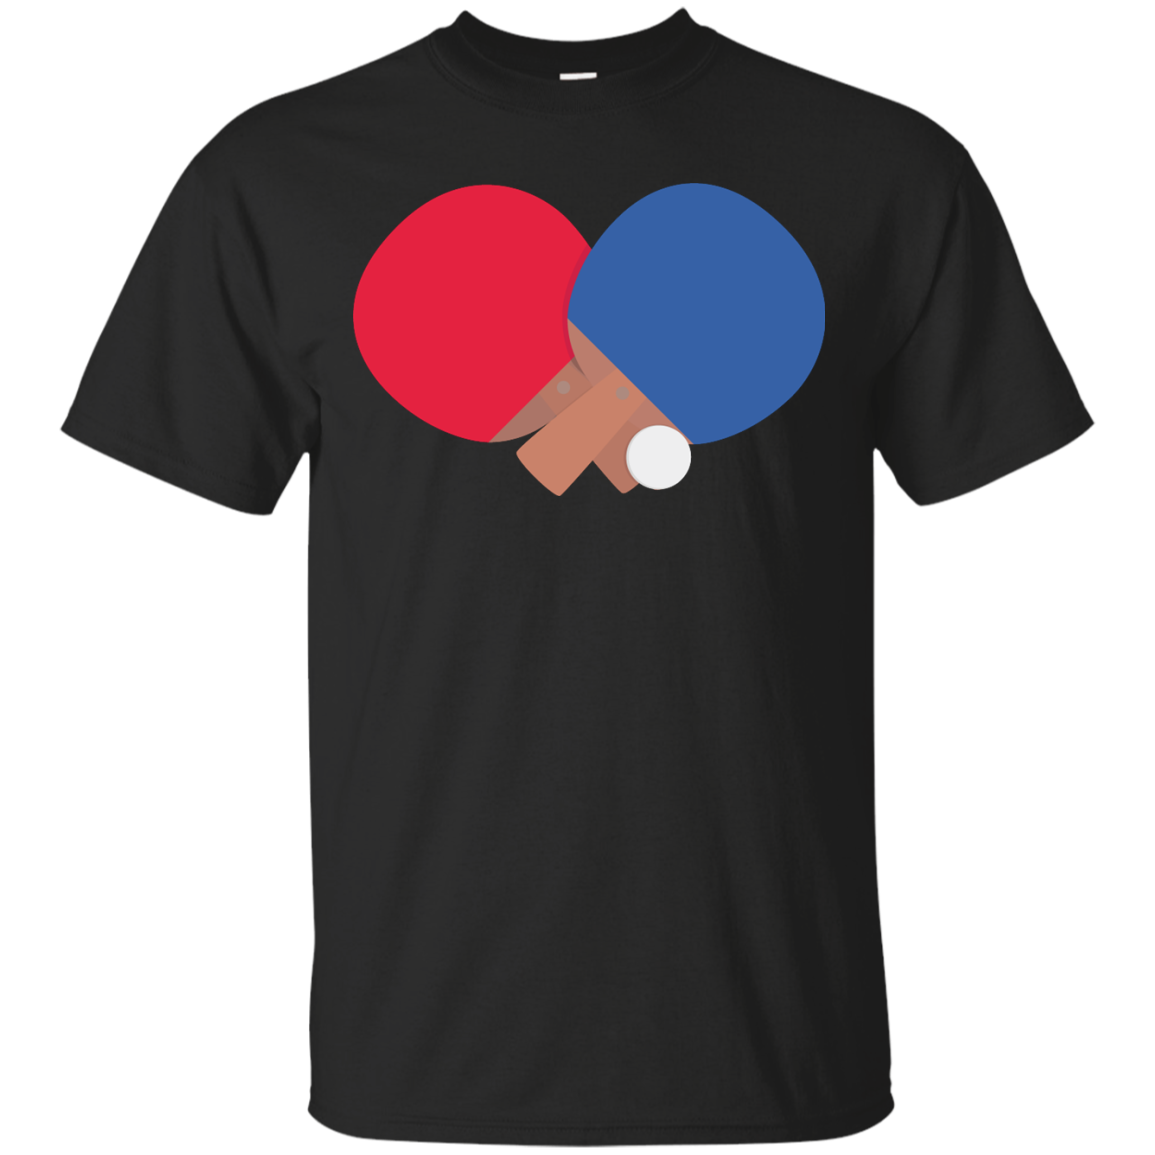 Table Tennis Bat And Ball T-shirt